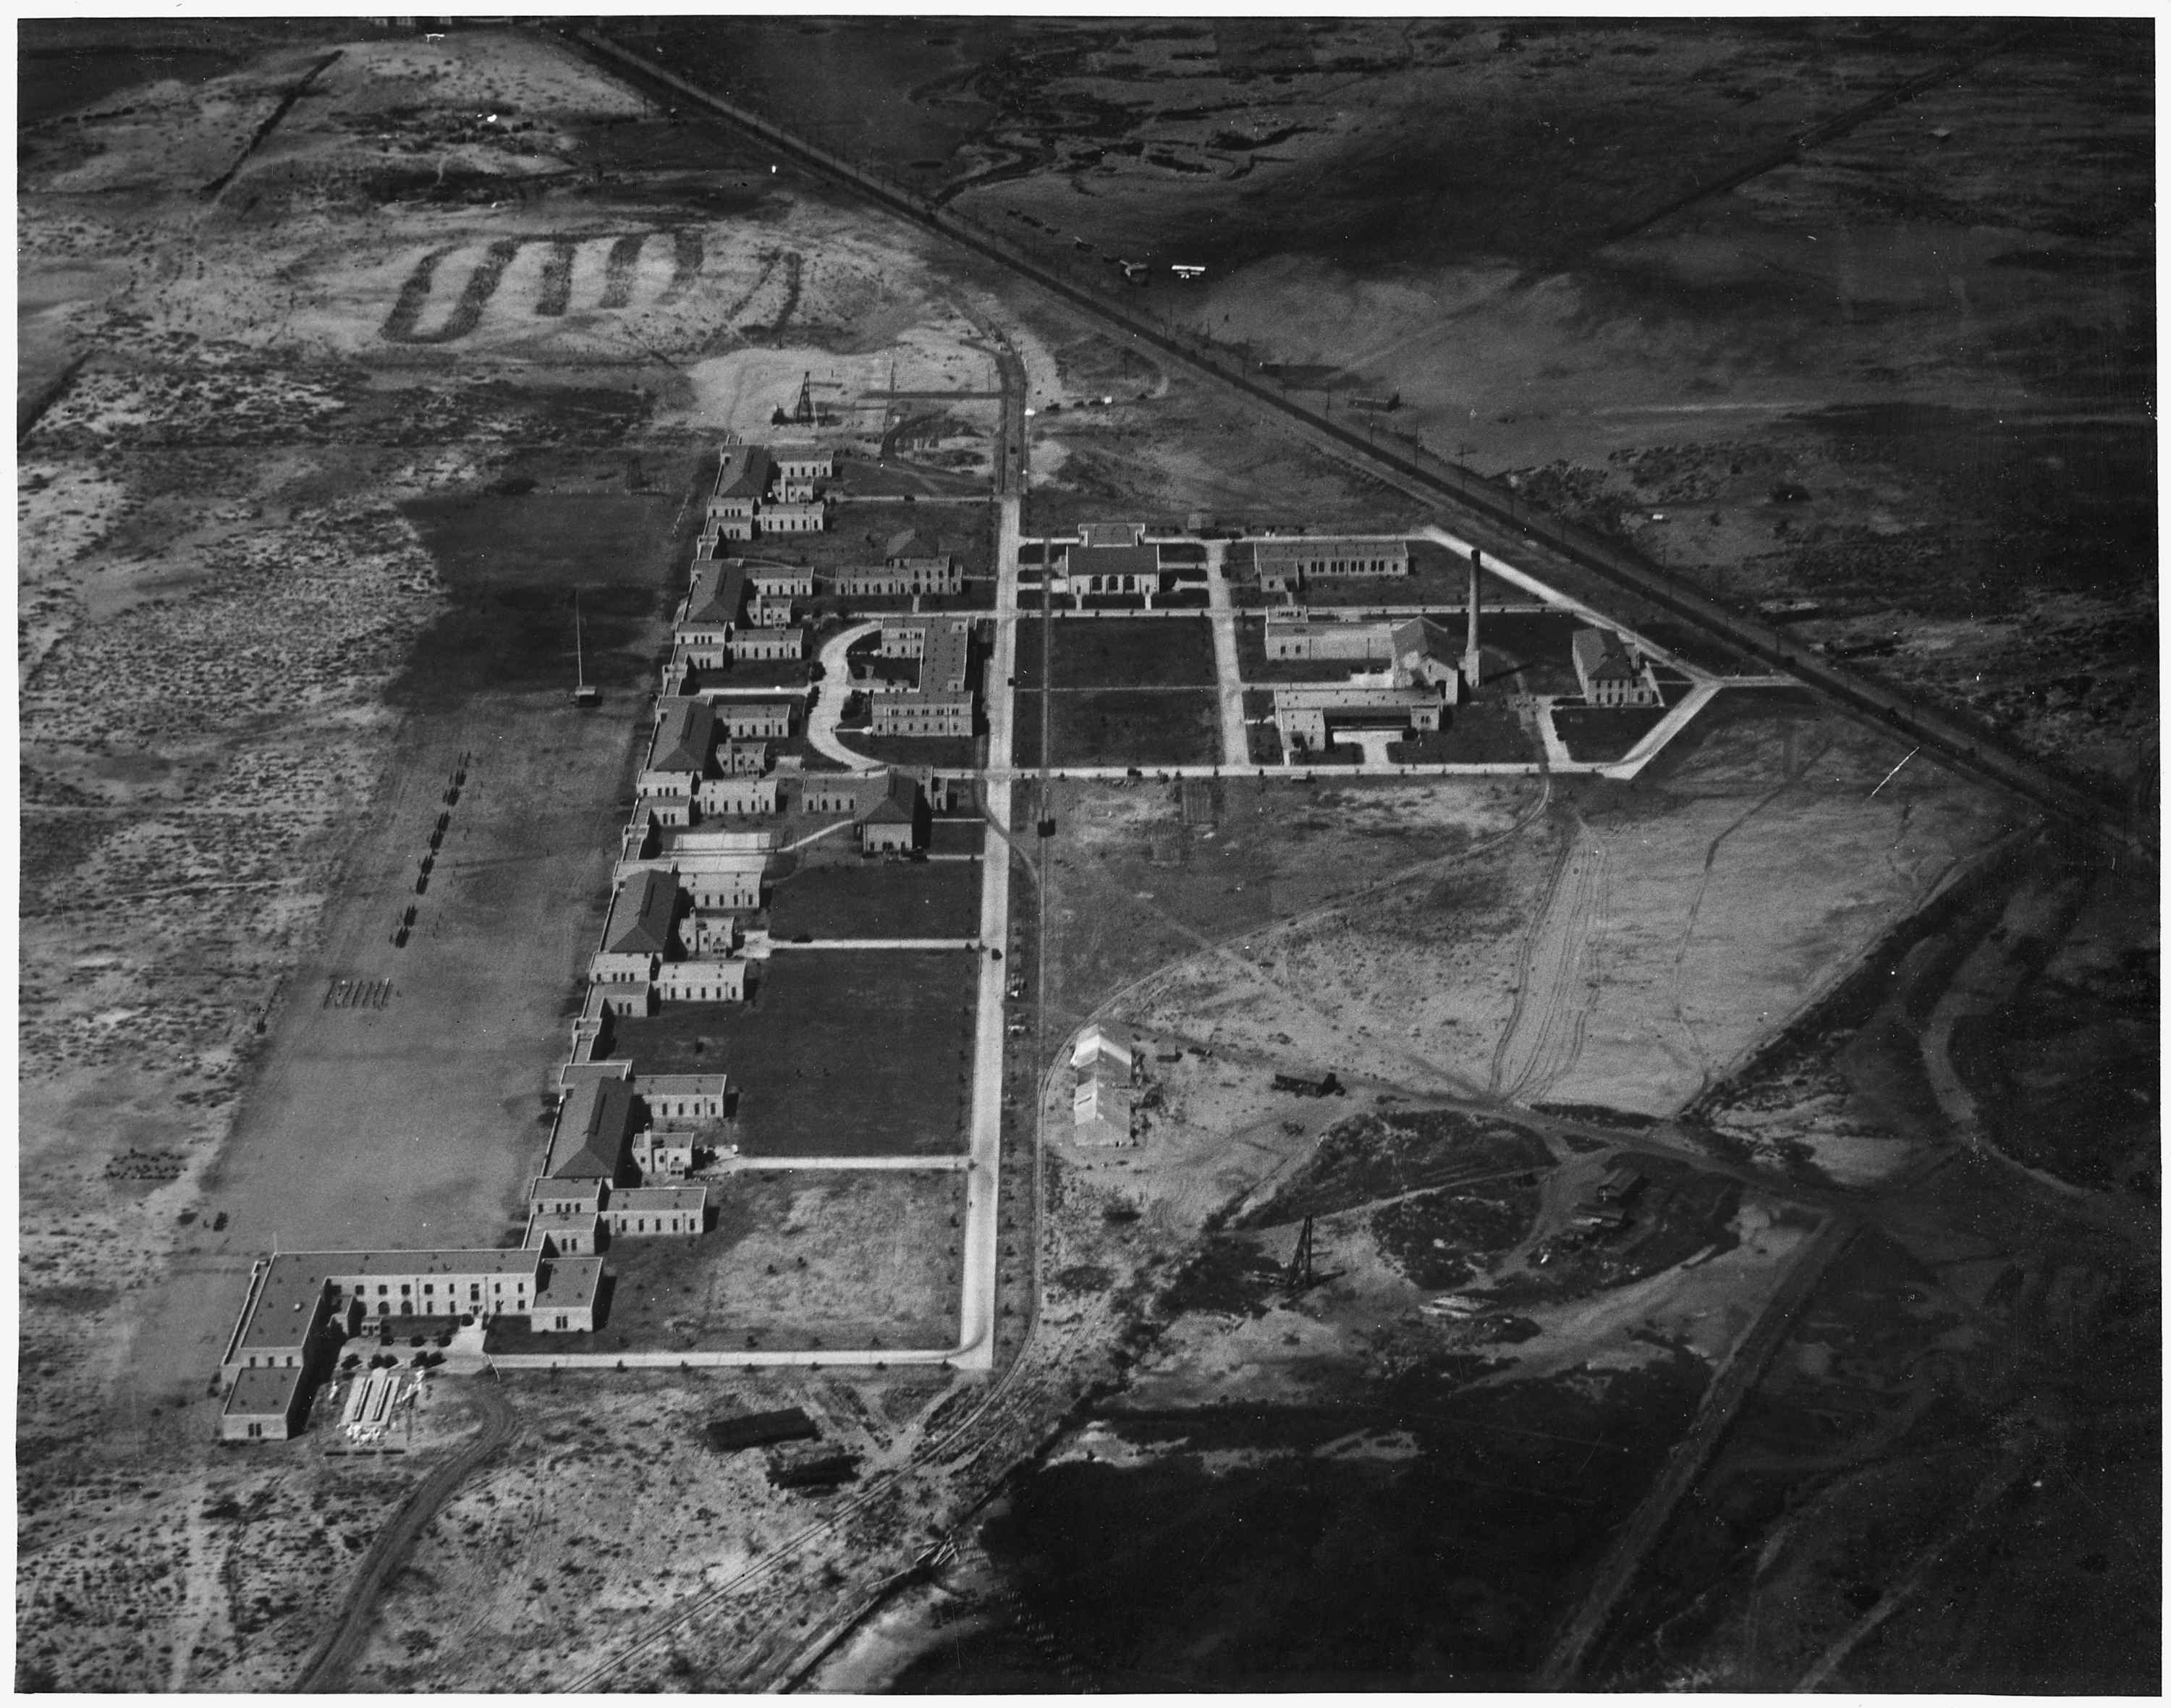 Marine Corps Base, Aerial View Showing Development, September 10, 1924 - Height 500 feet - NARA - 295438